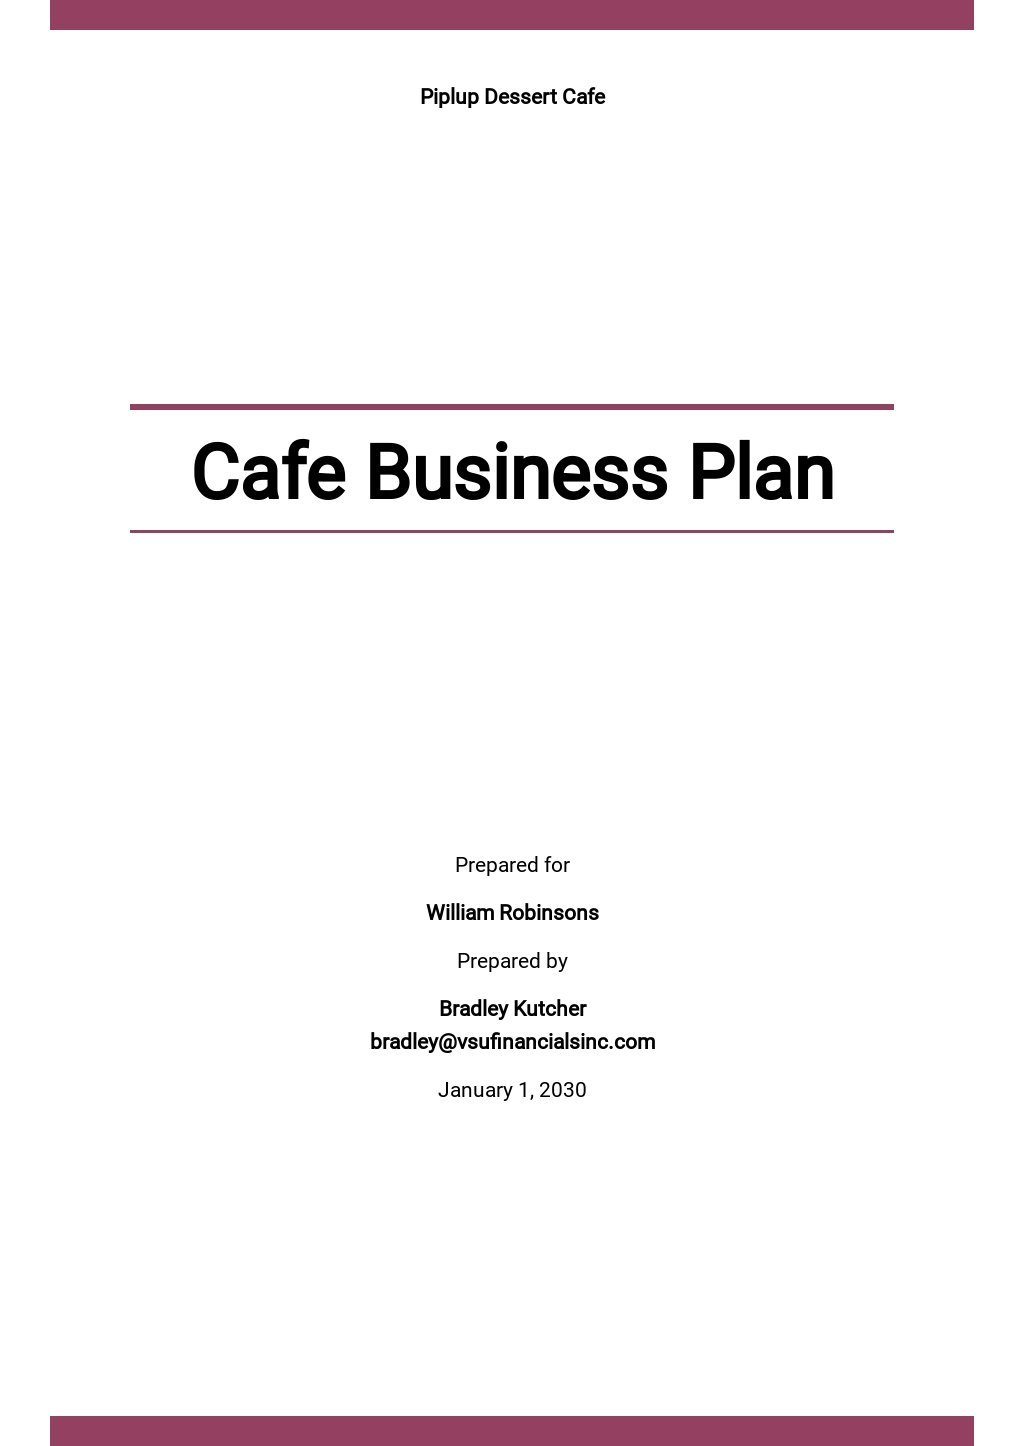 Cafe Business Plan Financial Template.jpe